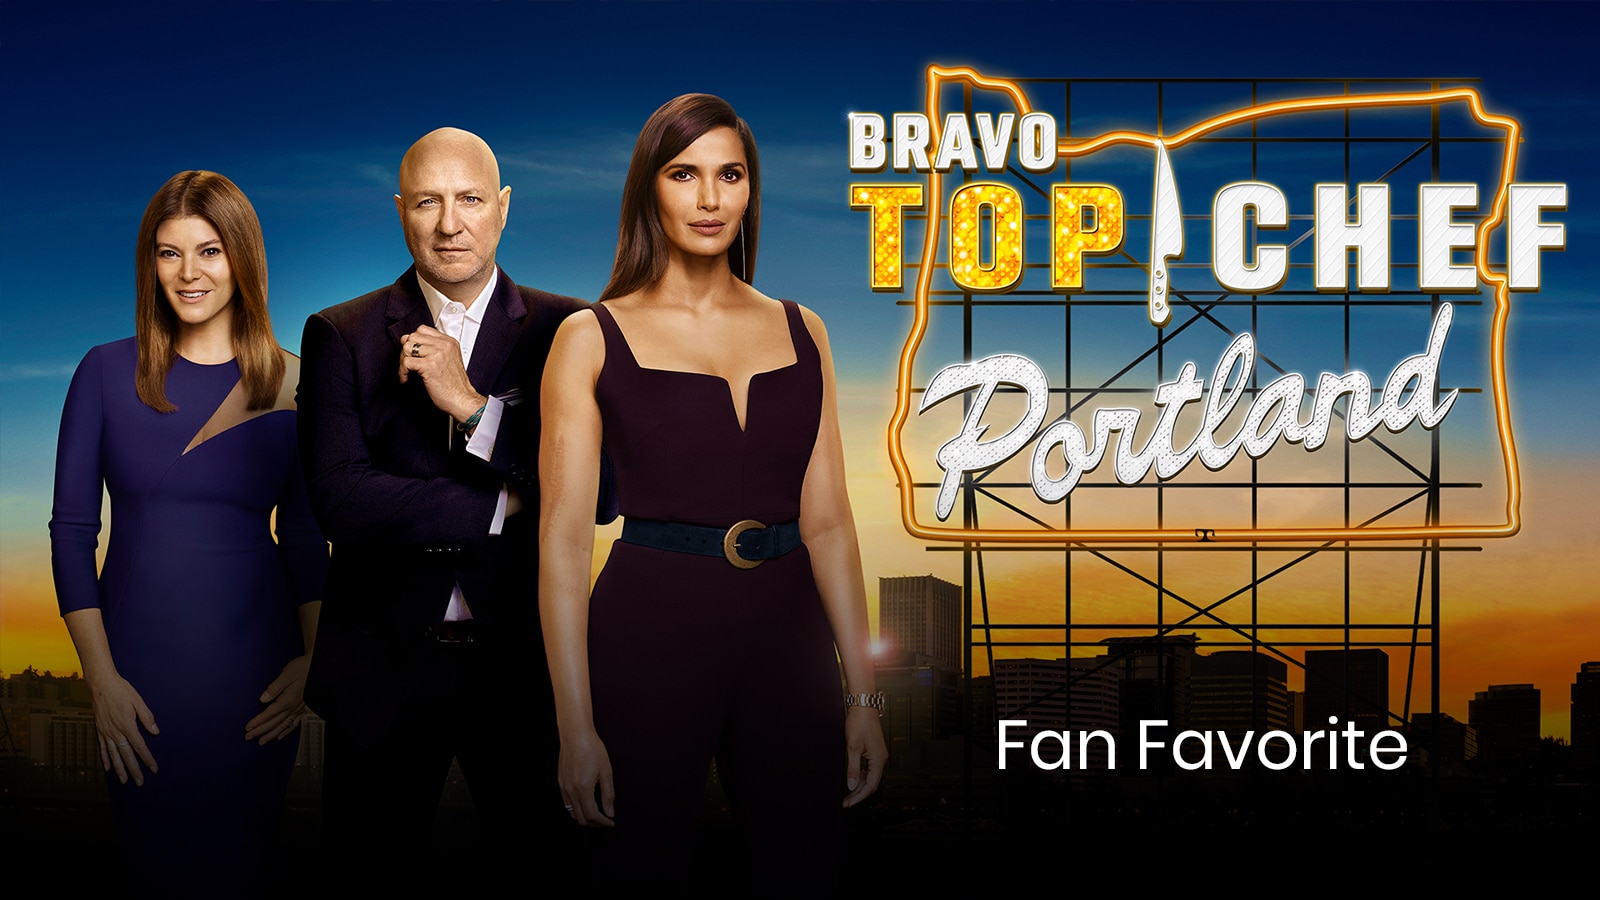 Top Chef Fan Favorite Bravo TV Official Site